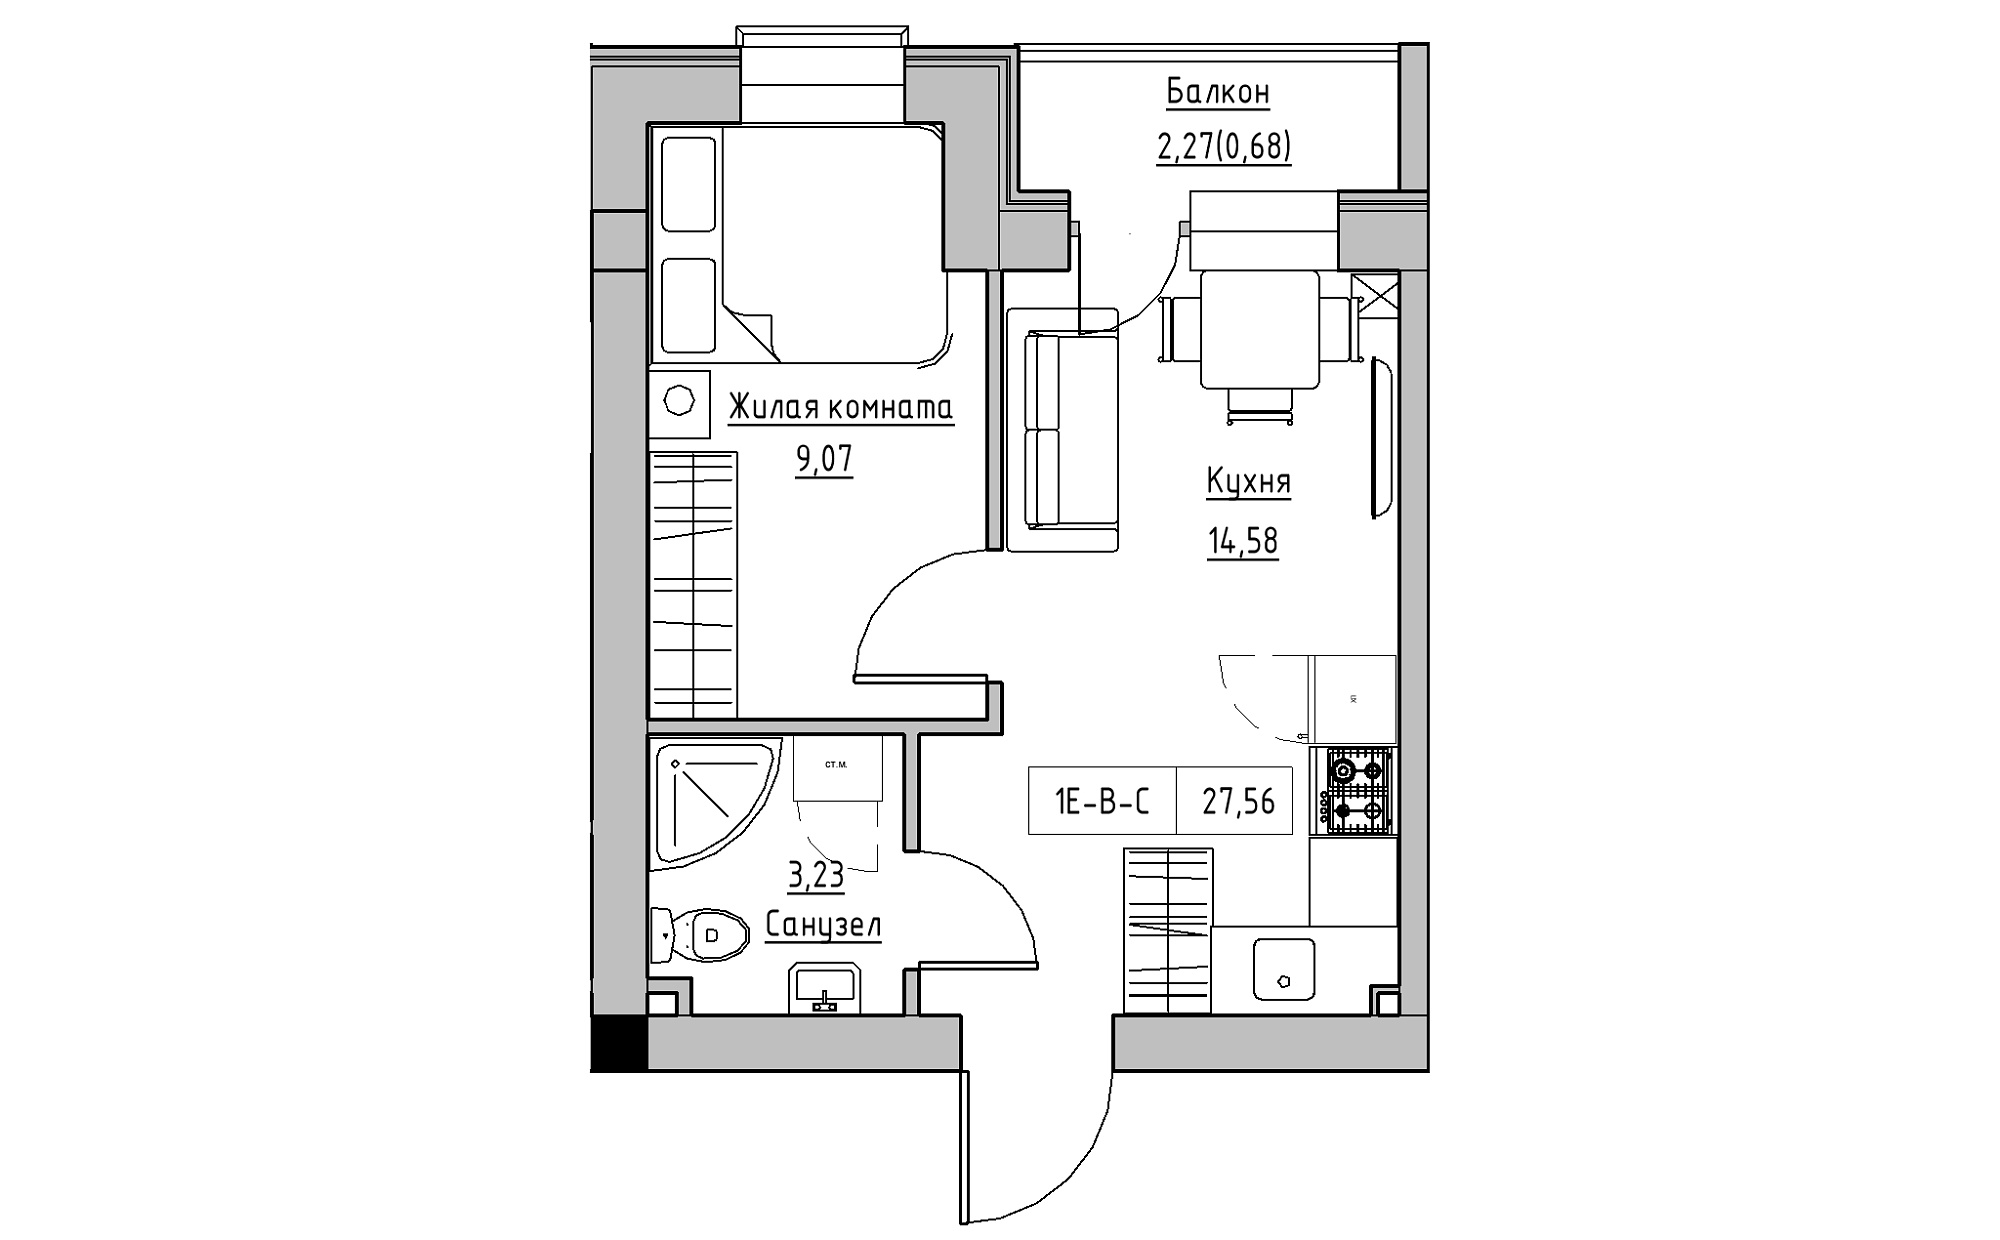 Planning 1-rm flats area 27.56m2, KS-022-05/0007.